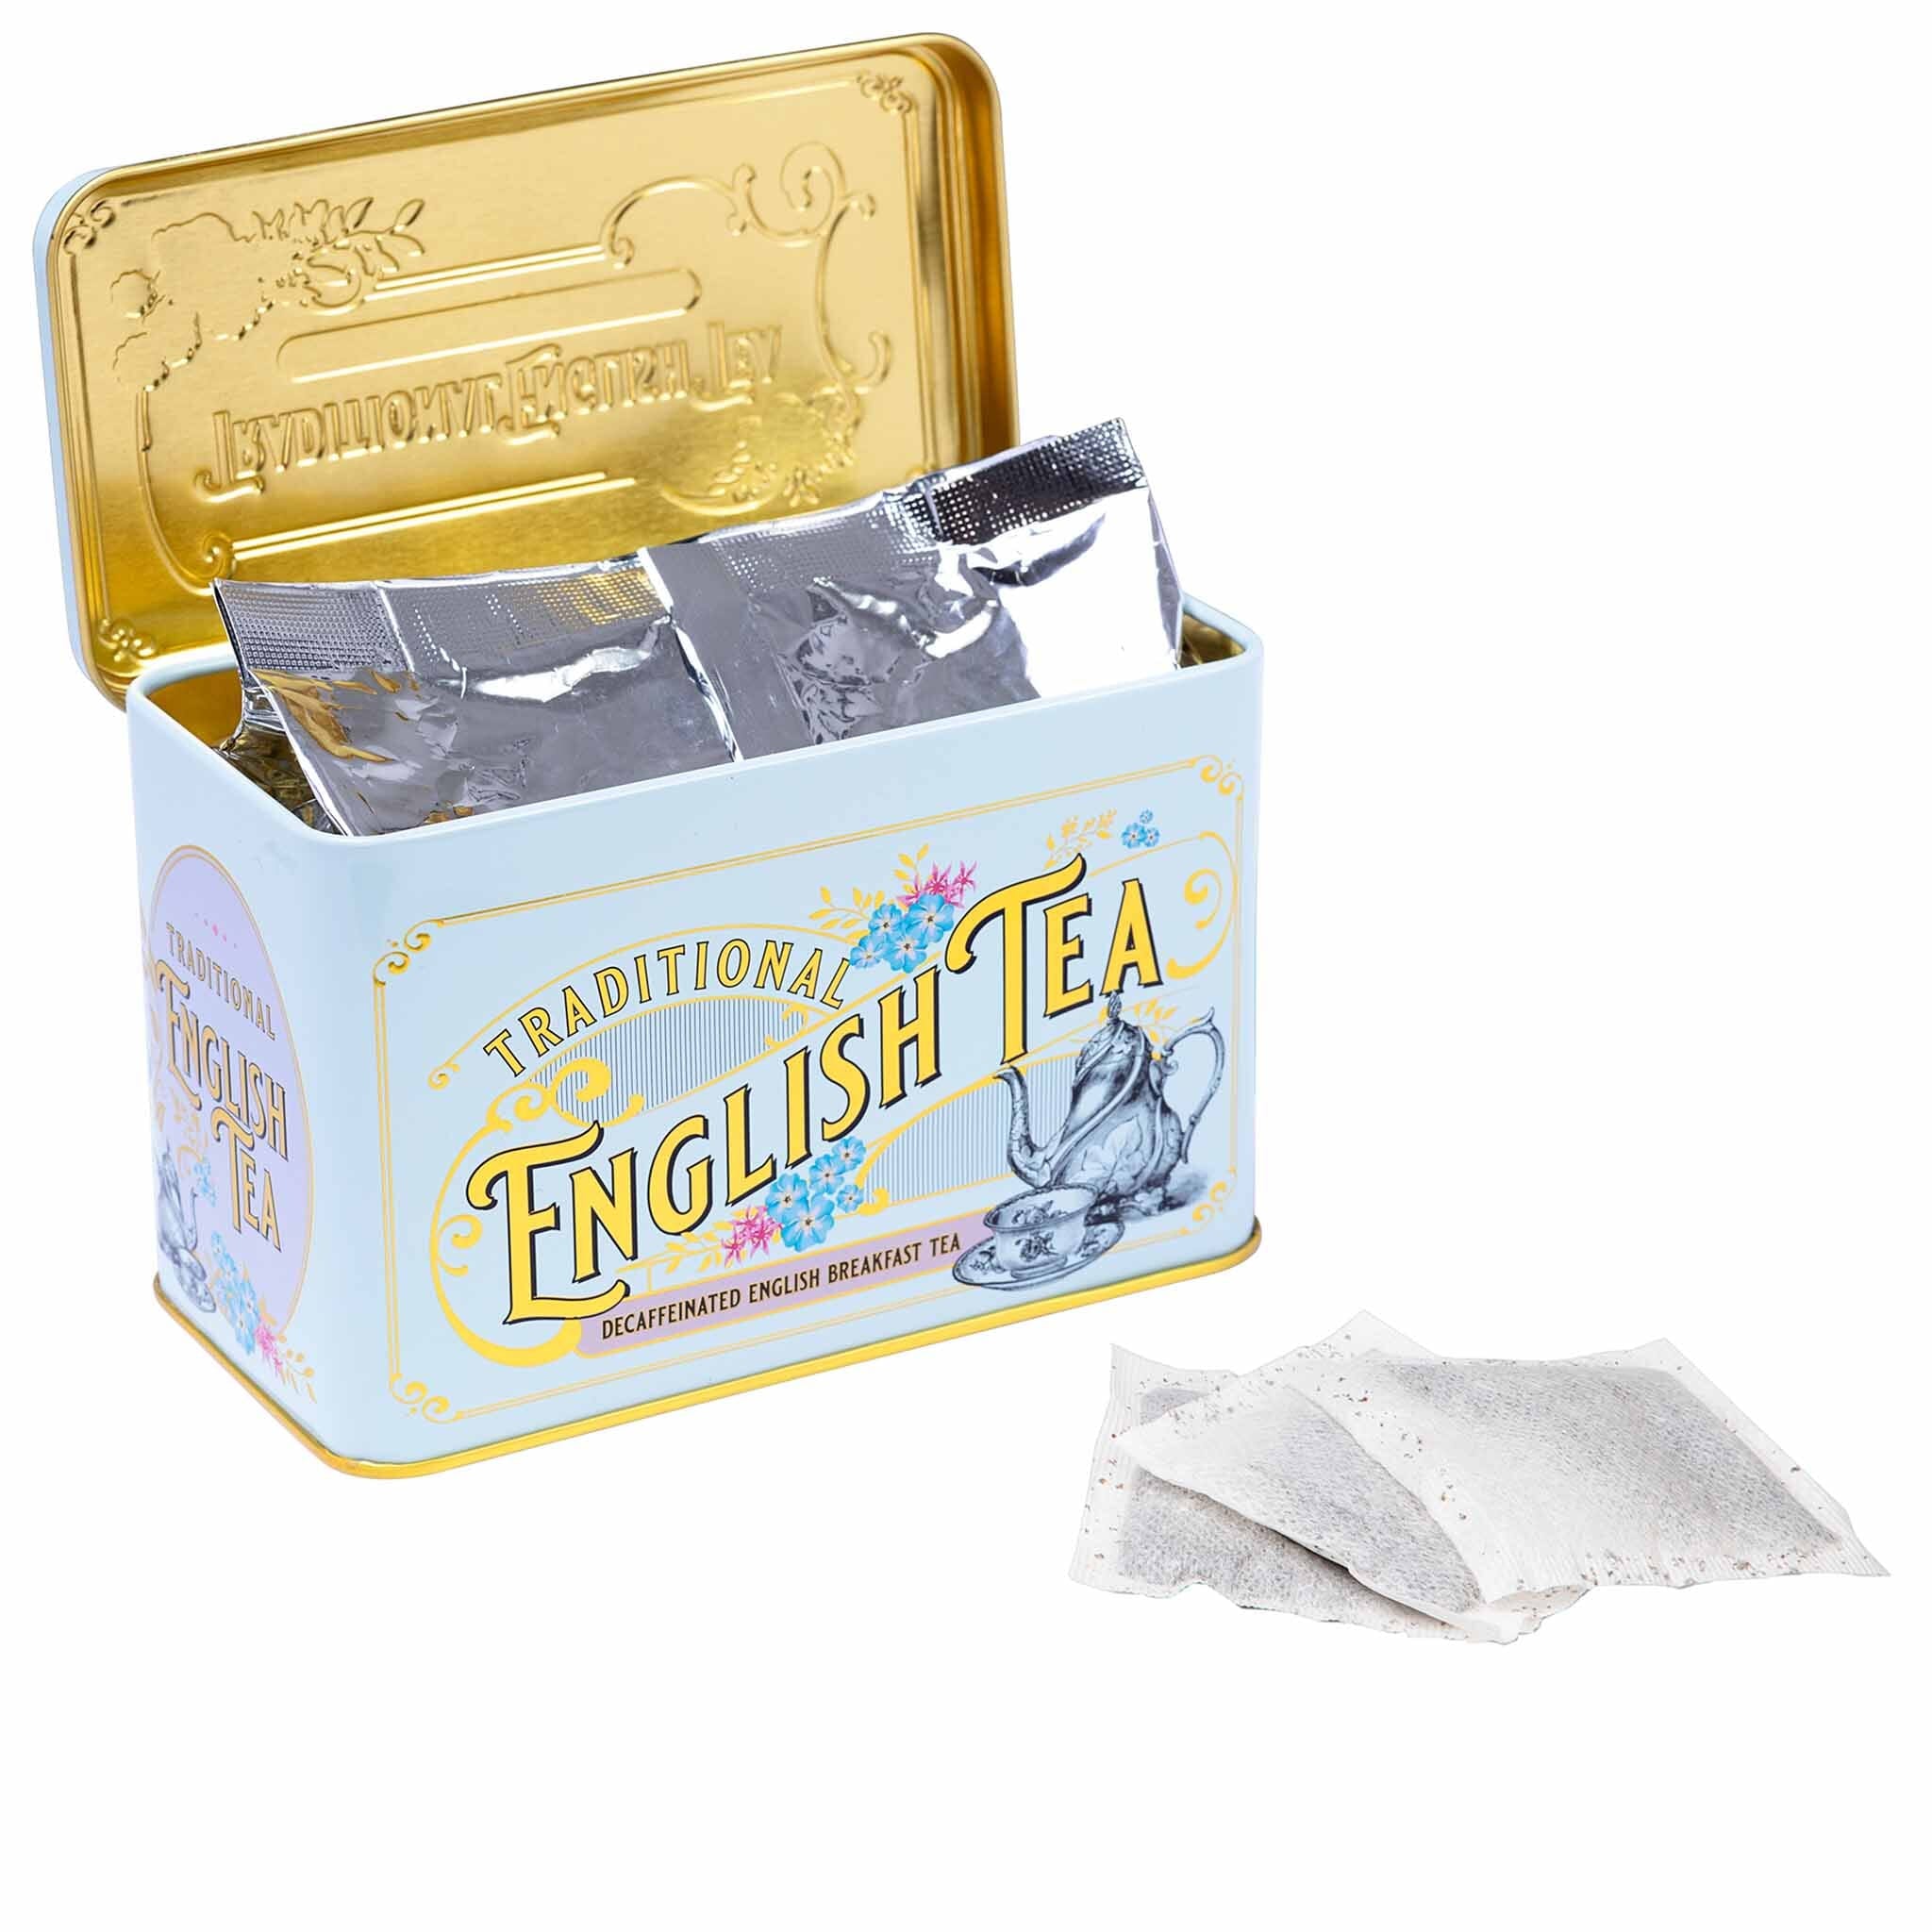 Vintage Victorian Powder-Blue Tea Caddy With 40 Decaffeinated English Breakfast Teabags Tea Tins New English Teas 